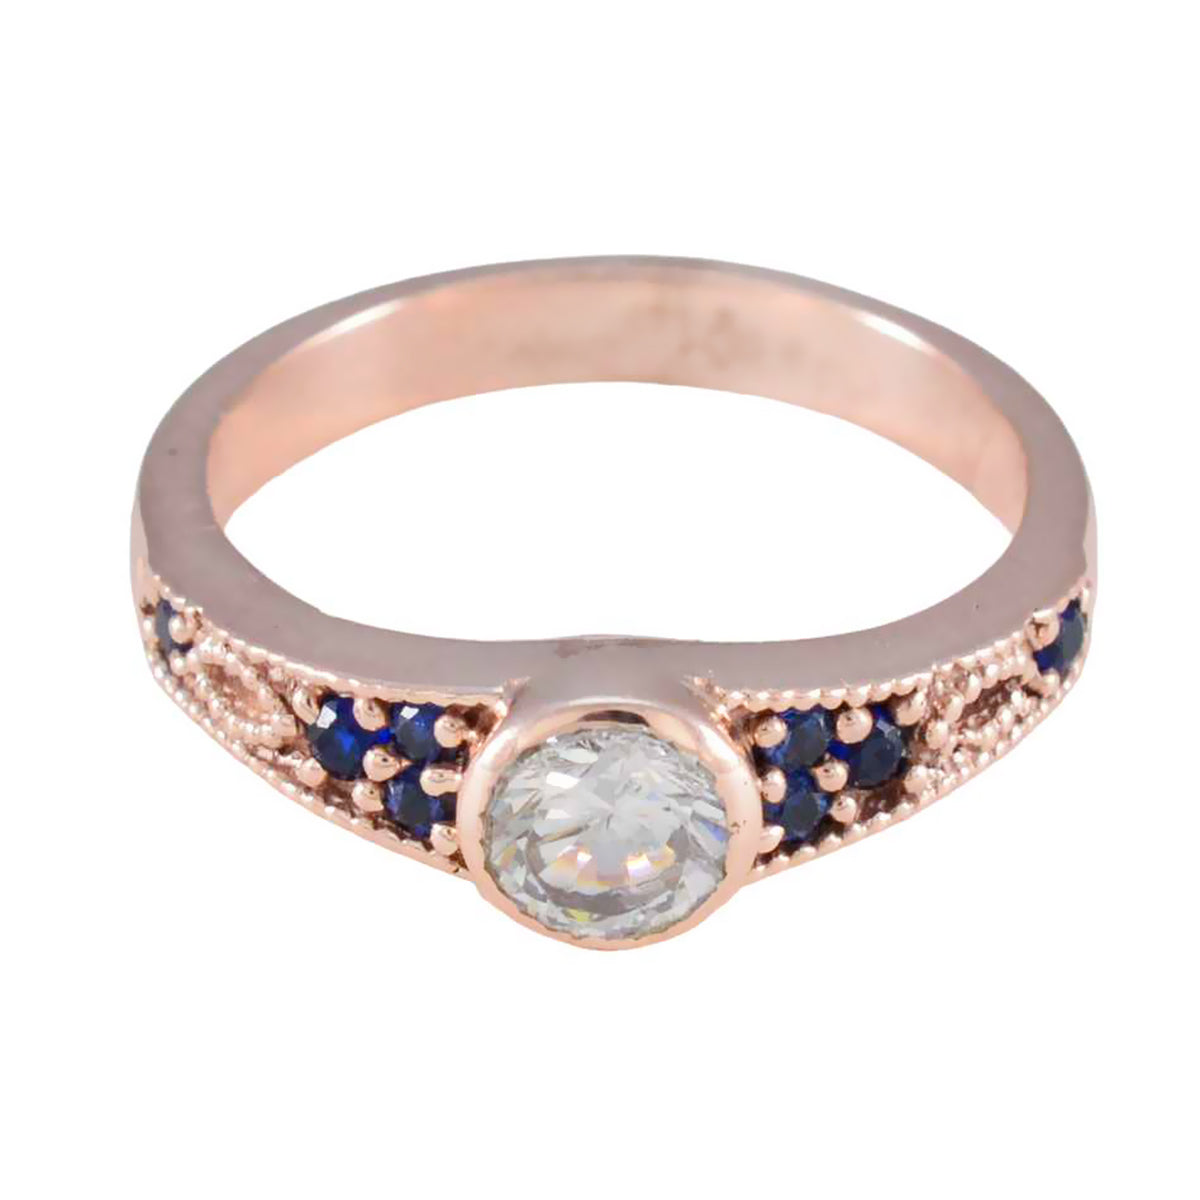 Riyo Adorable Silver Ring With Rose Gold Plating Blue Sapphire CZ Stone Round Shape Bezel Setting Handamde Jewelry New Year Ring